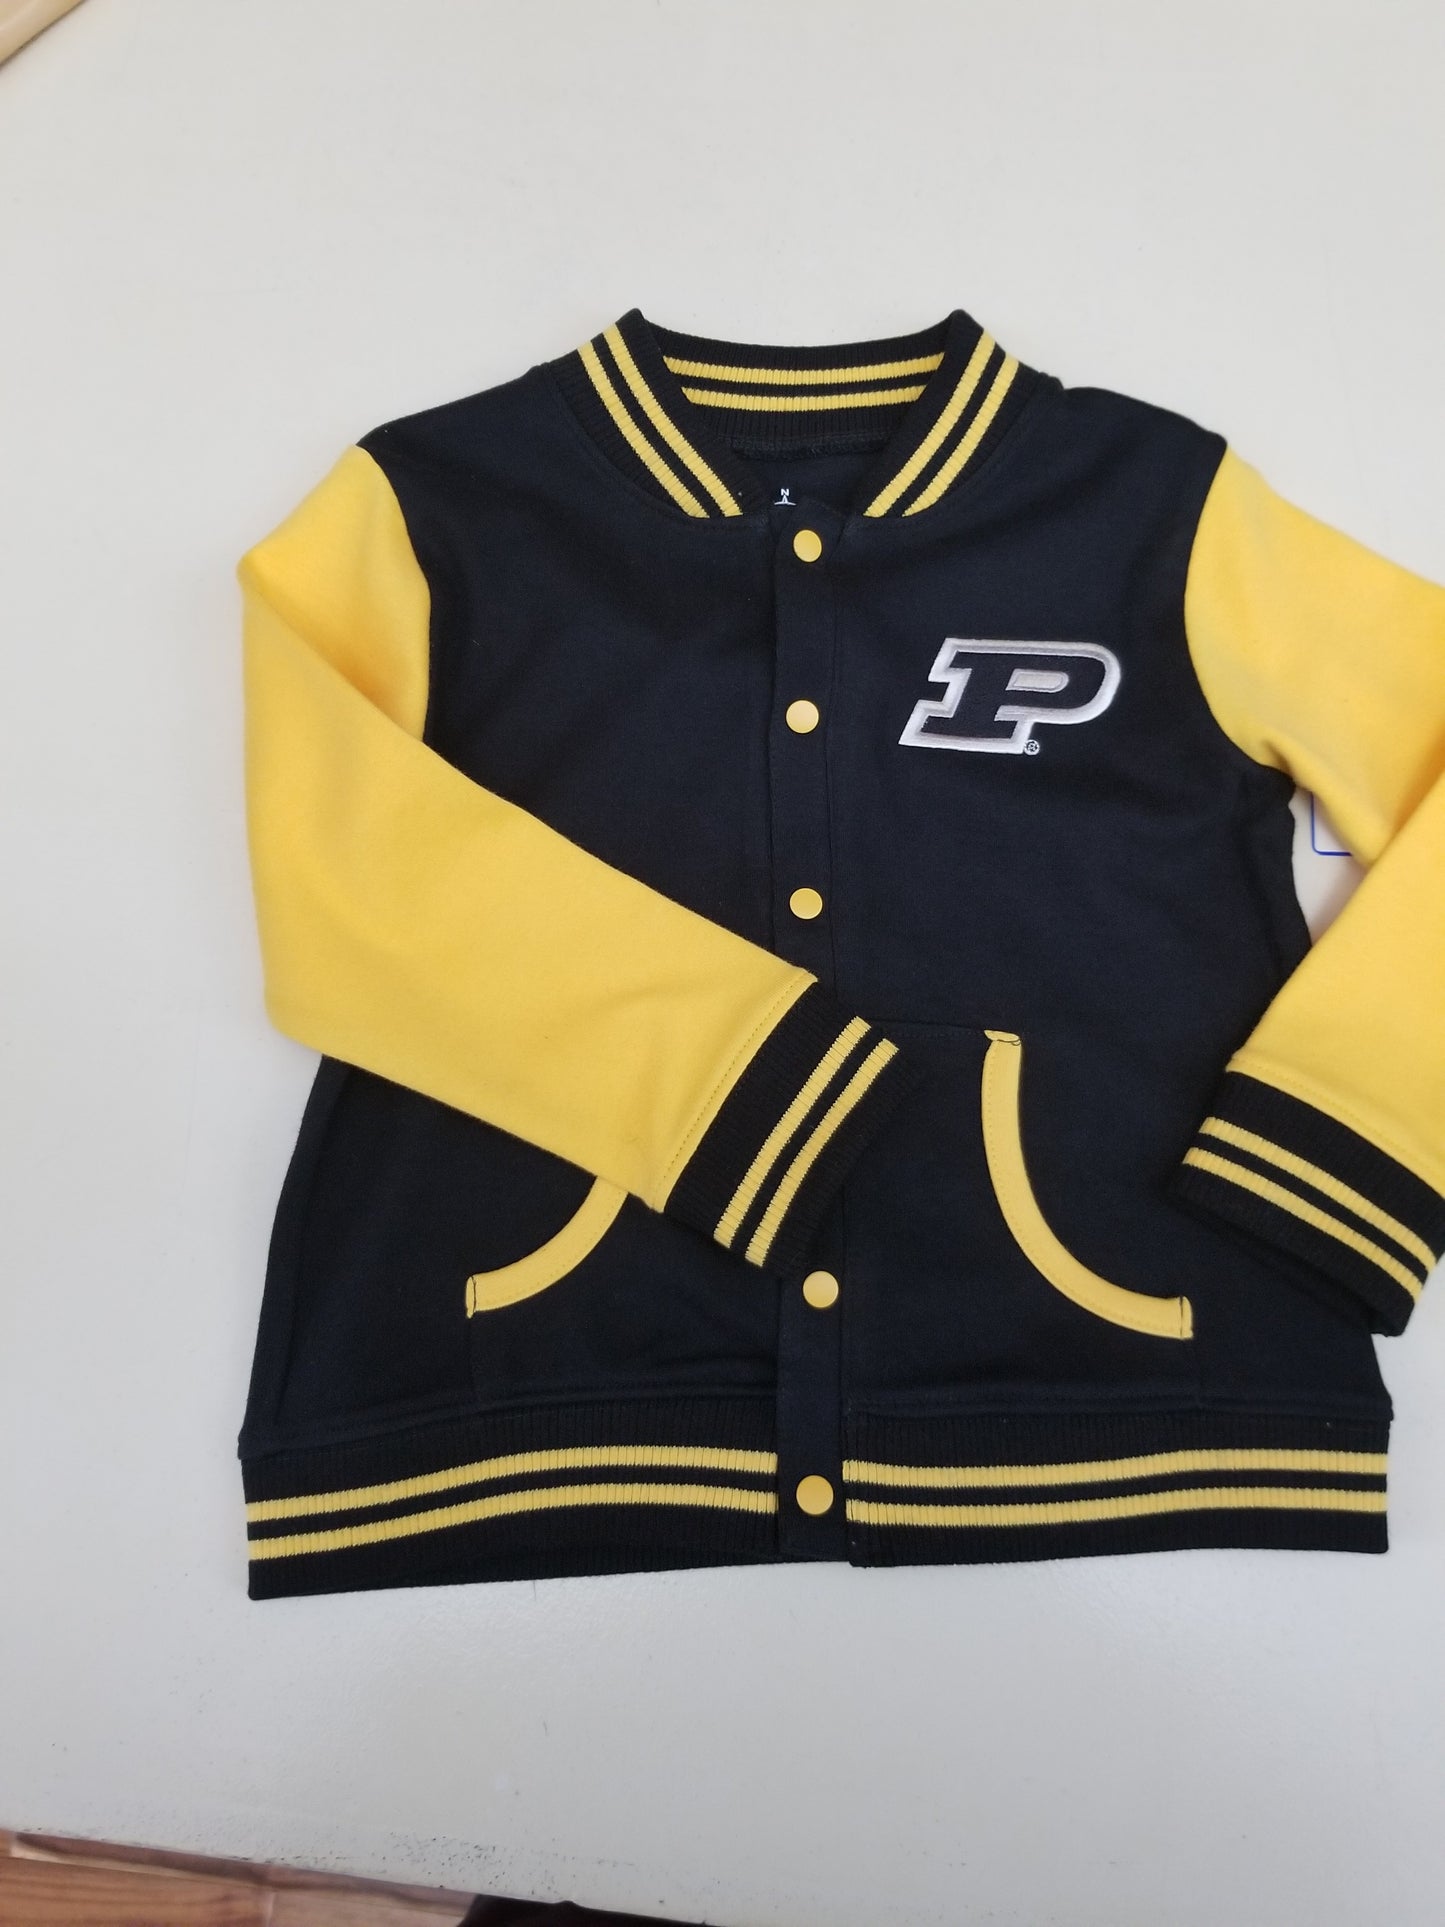 Purdue Kids Varsity Jacket